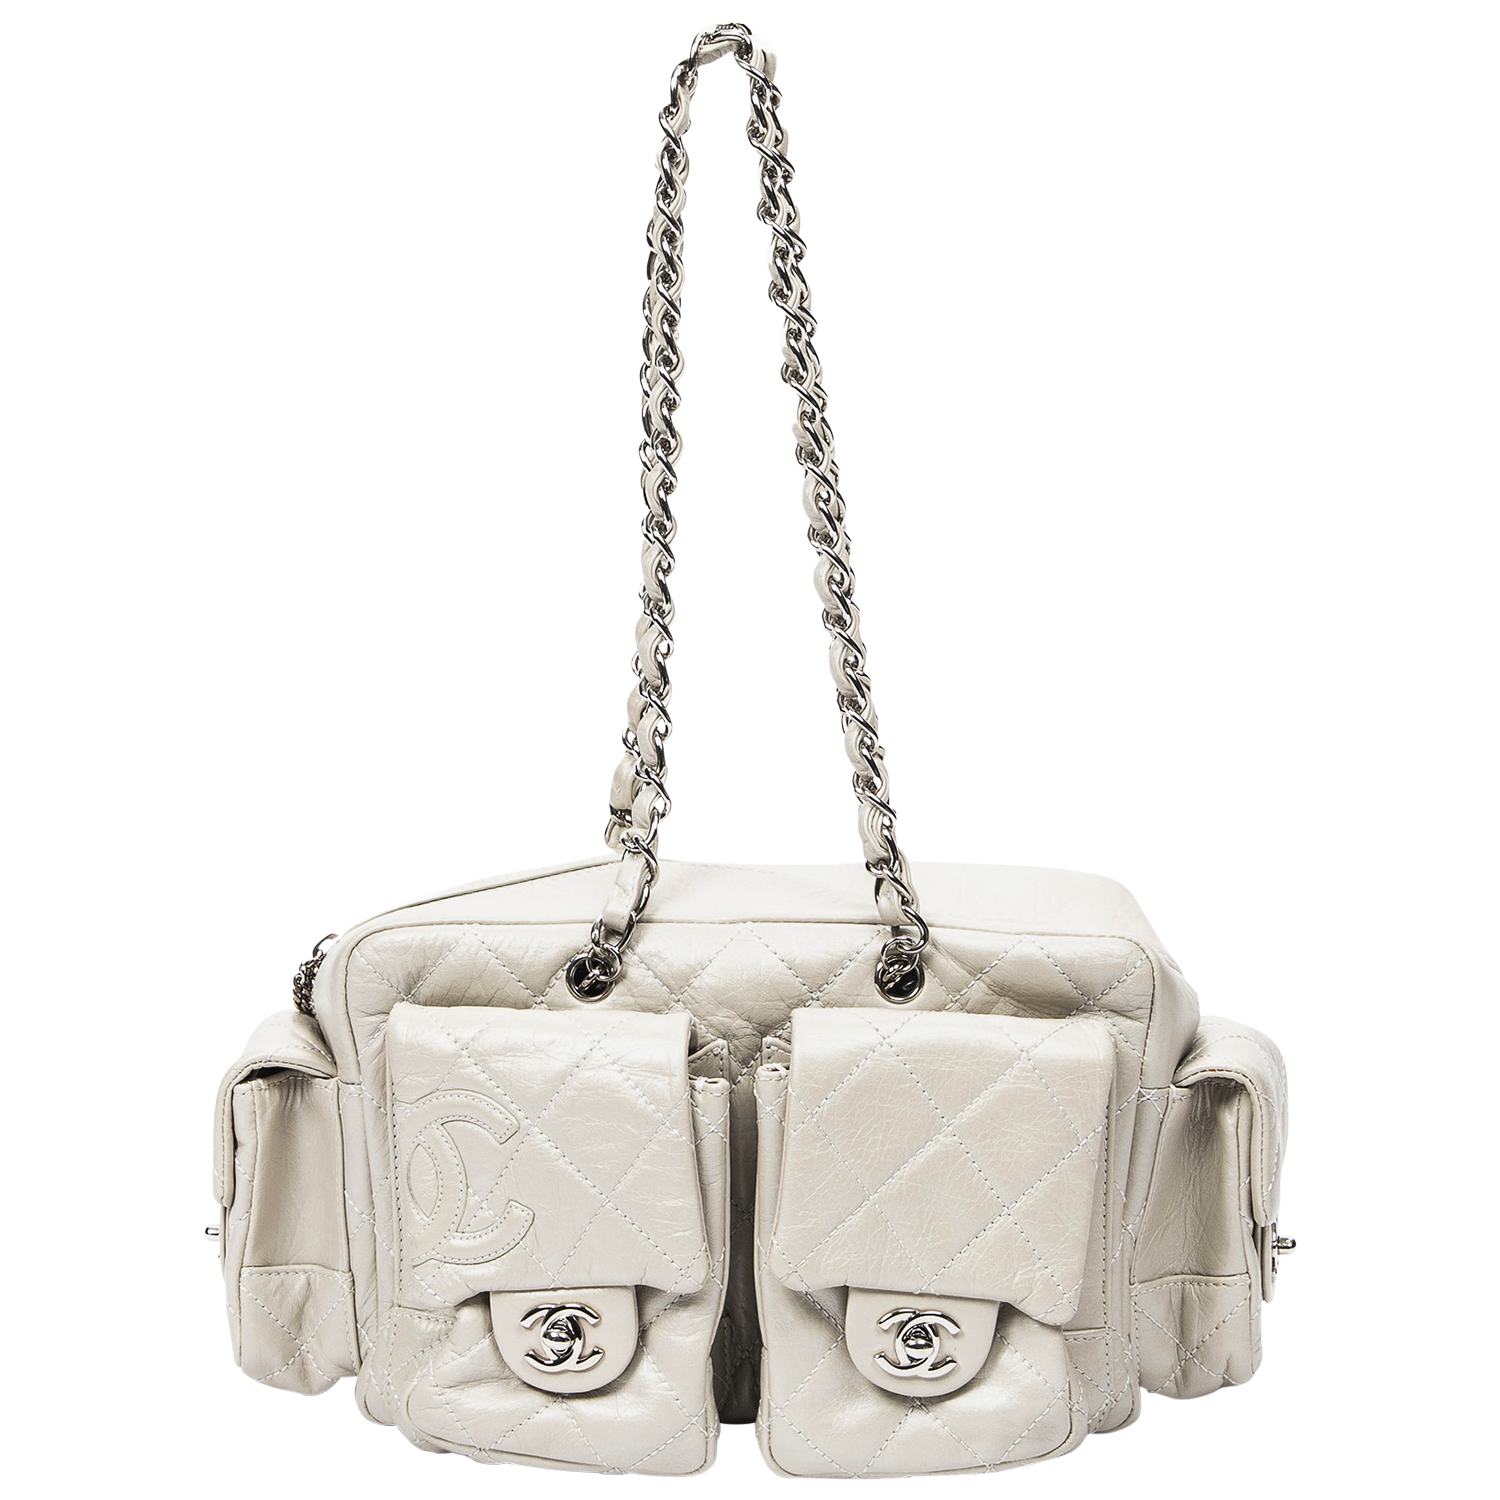 Chanel 2006 Ivory Cambon Multi Pocket Bag